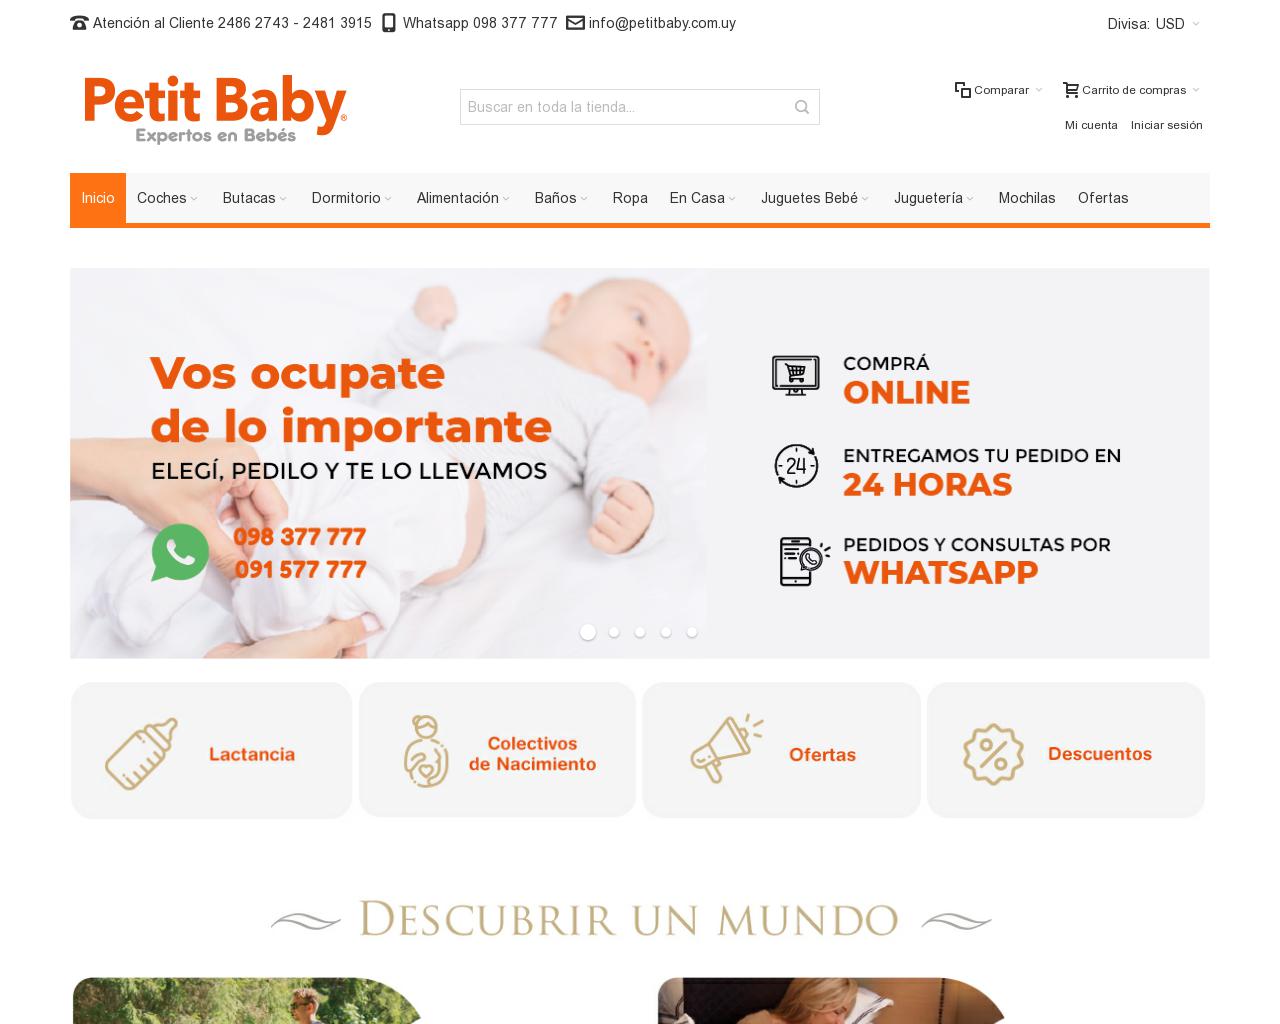 petitbaby.com.uy